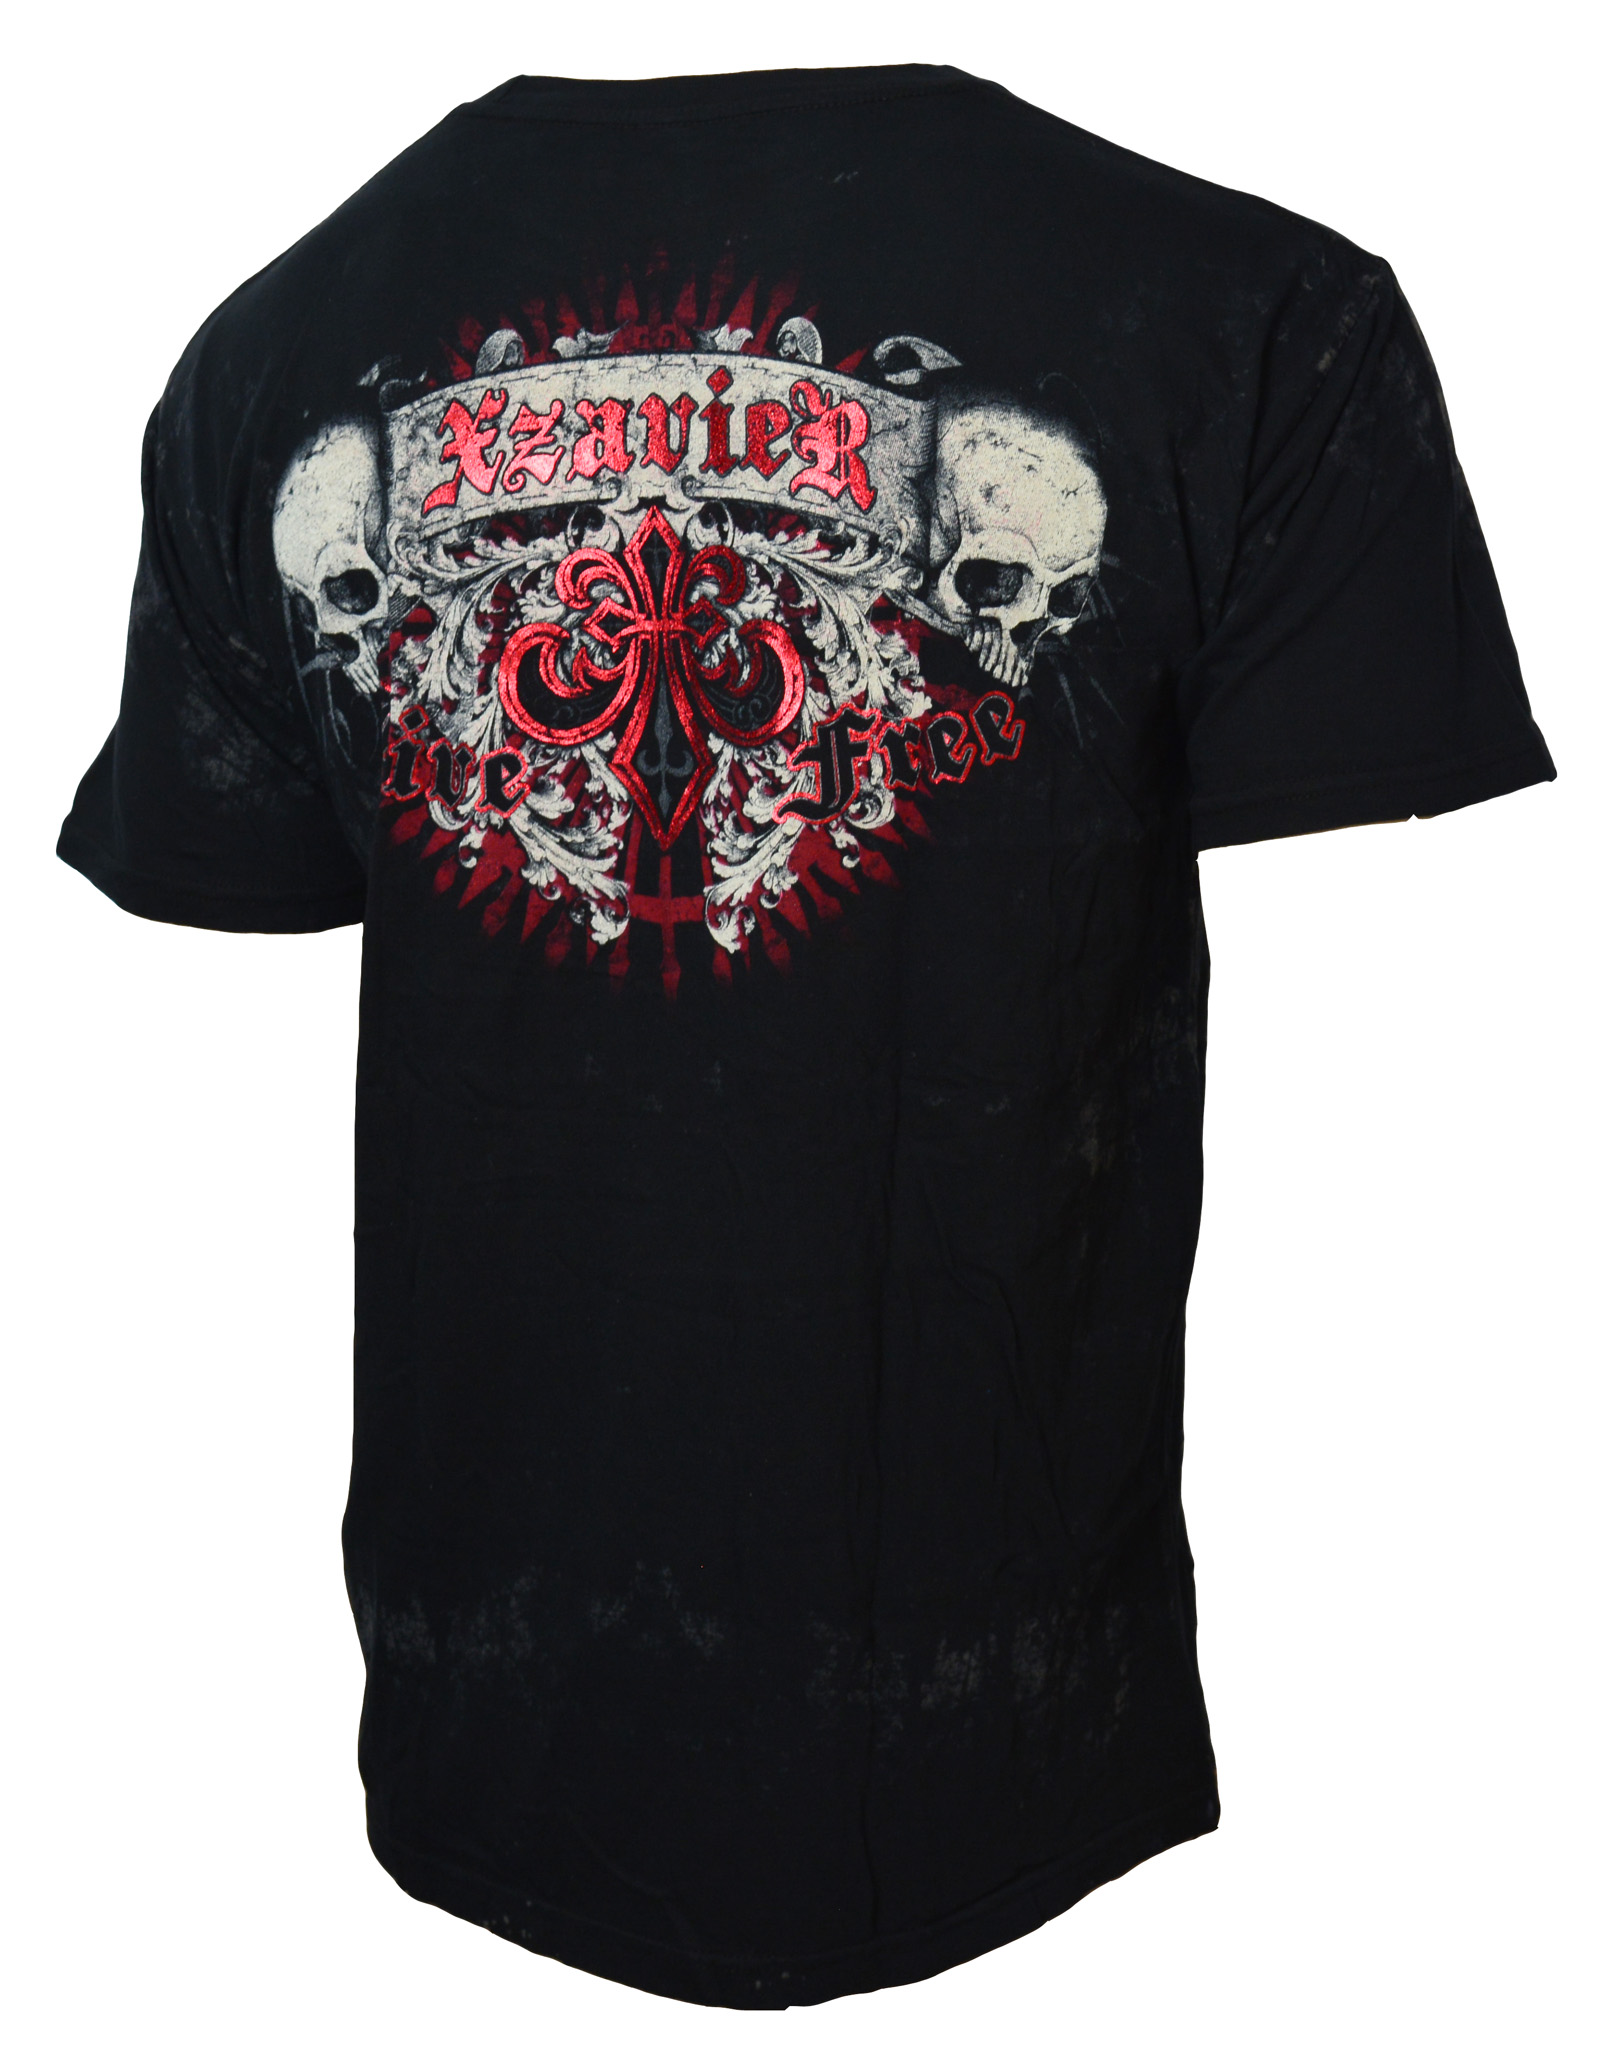 XZAVIER [TRADITION SKULL] T-Shirt Biker Harley Rocker Gothic Tribal MMA ...